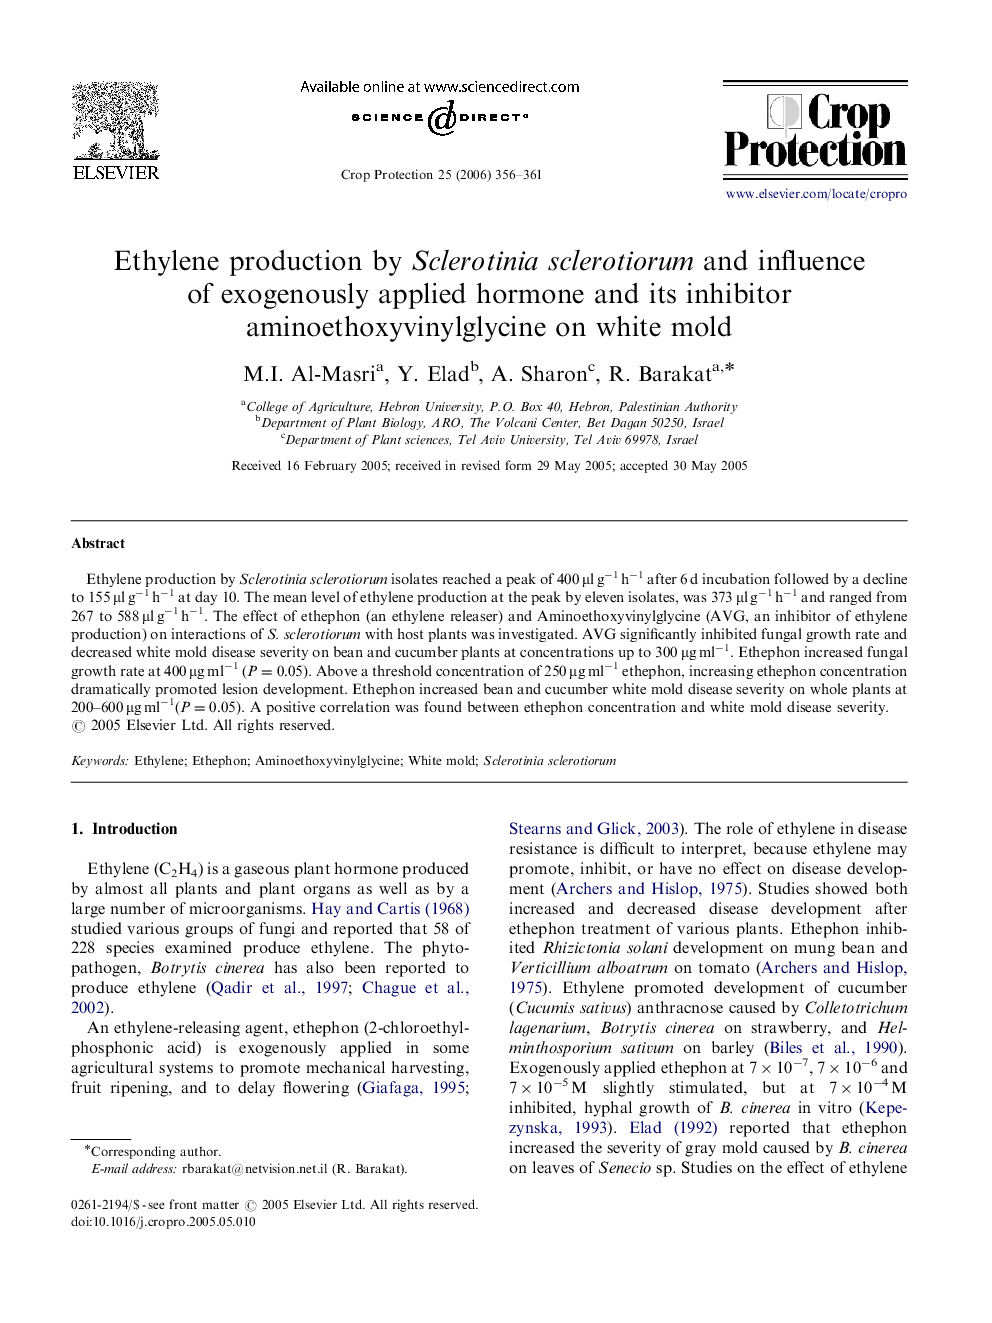 Ethylene production by Sclerotinia sclerotiorum and influence of exogenously applied hormone and its inhibitor aminoethoxyvinylglycine on white mold